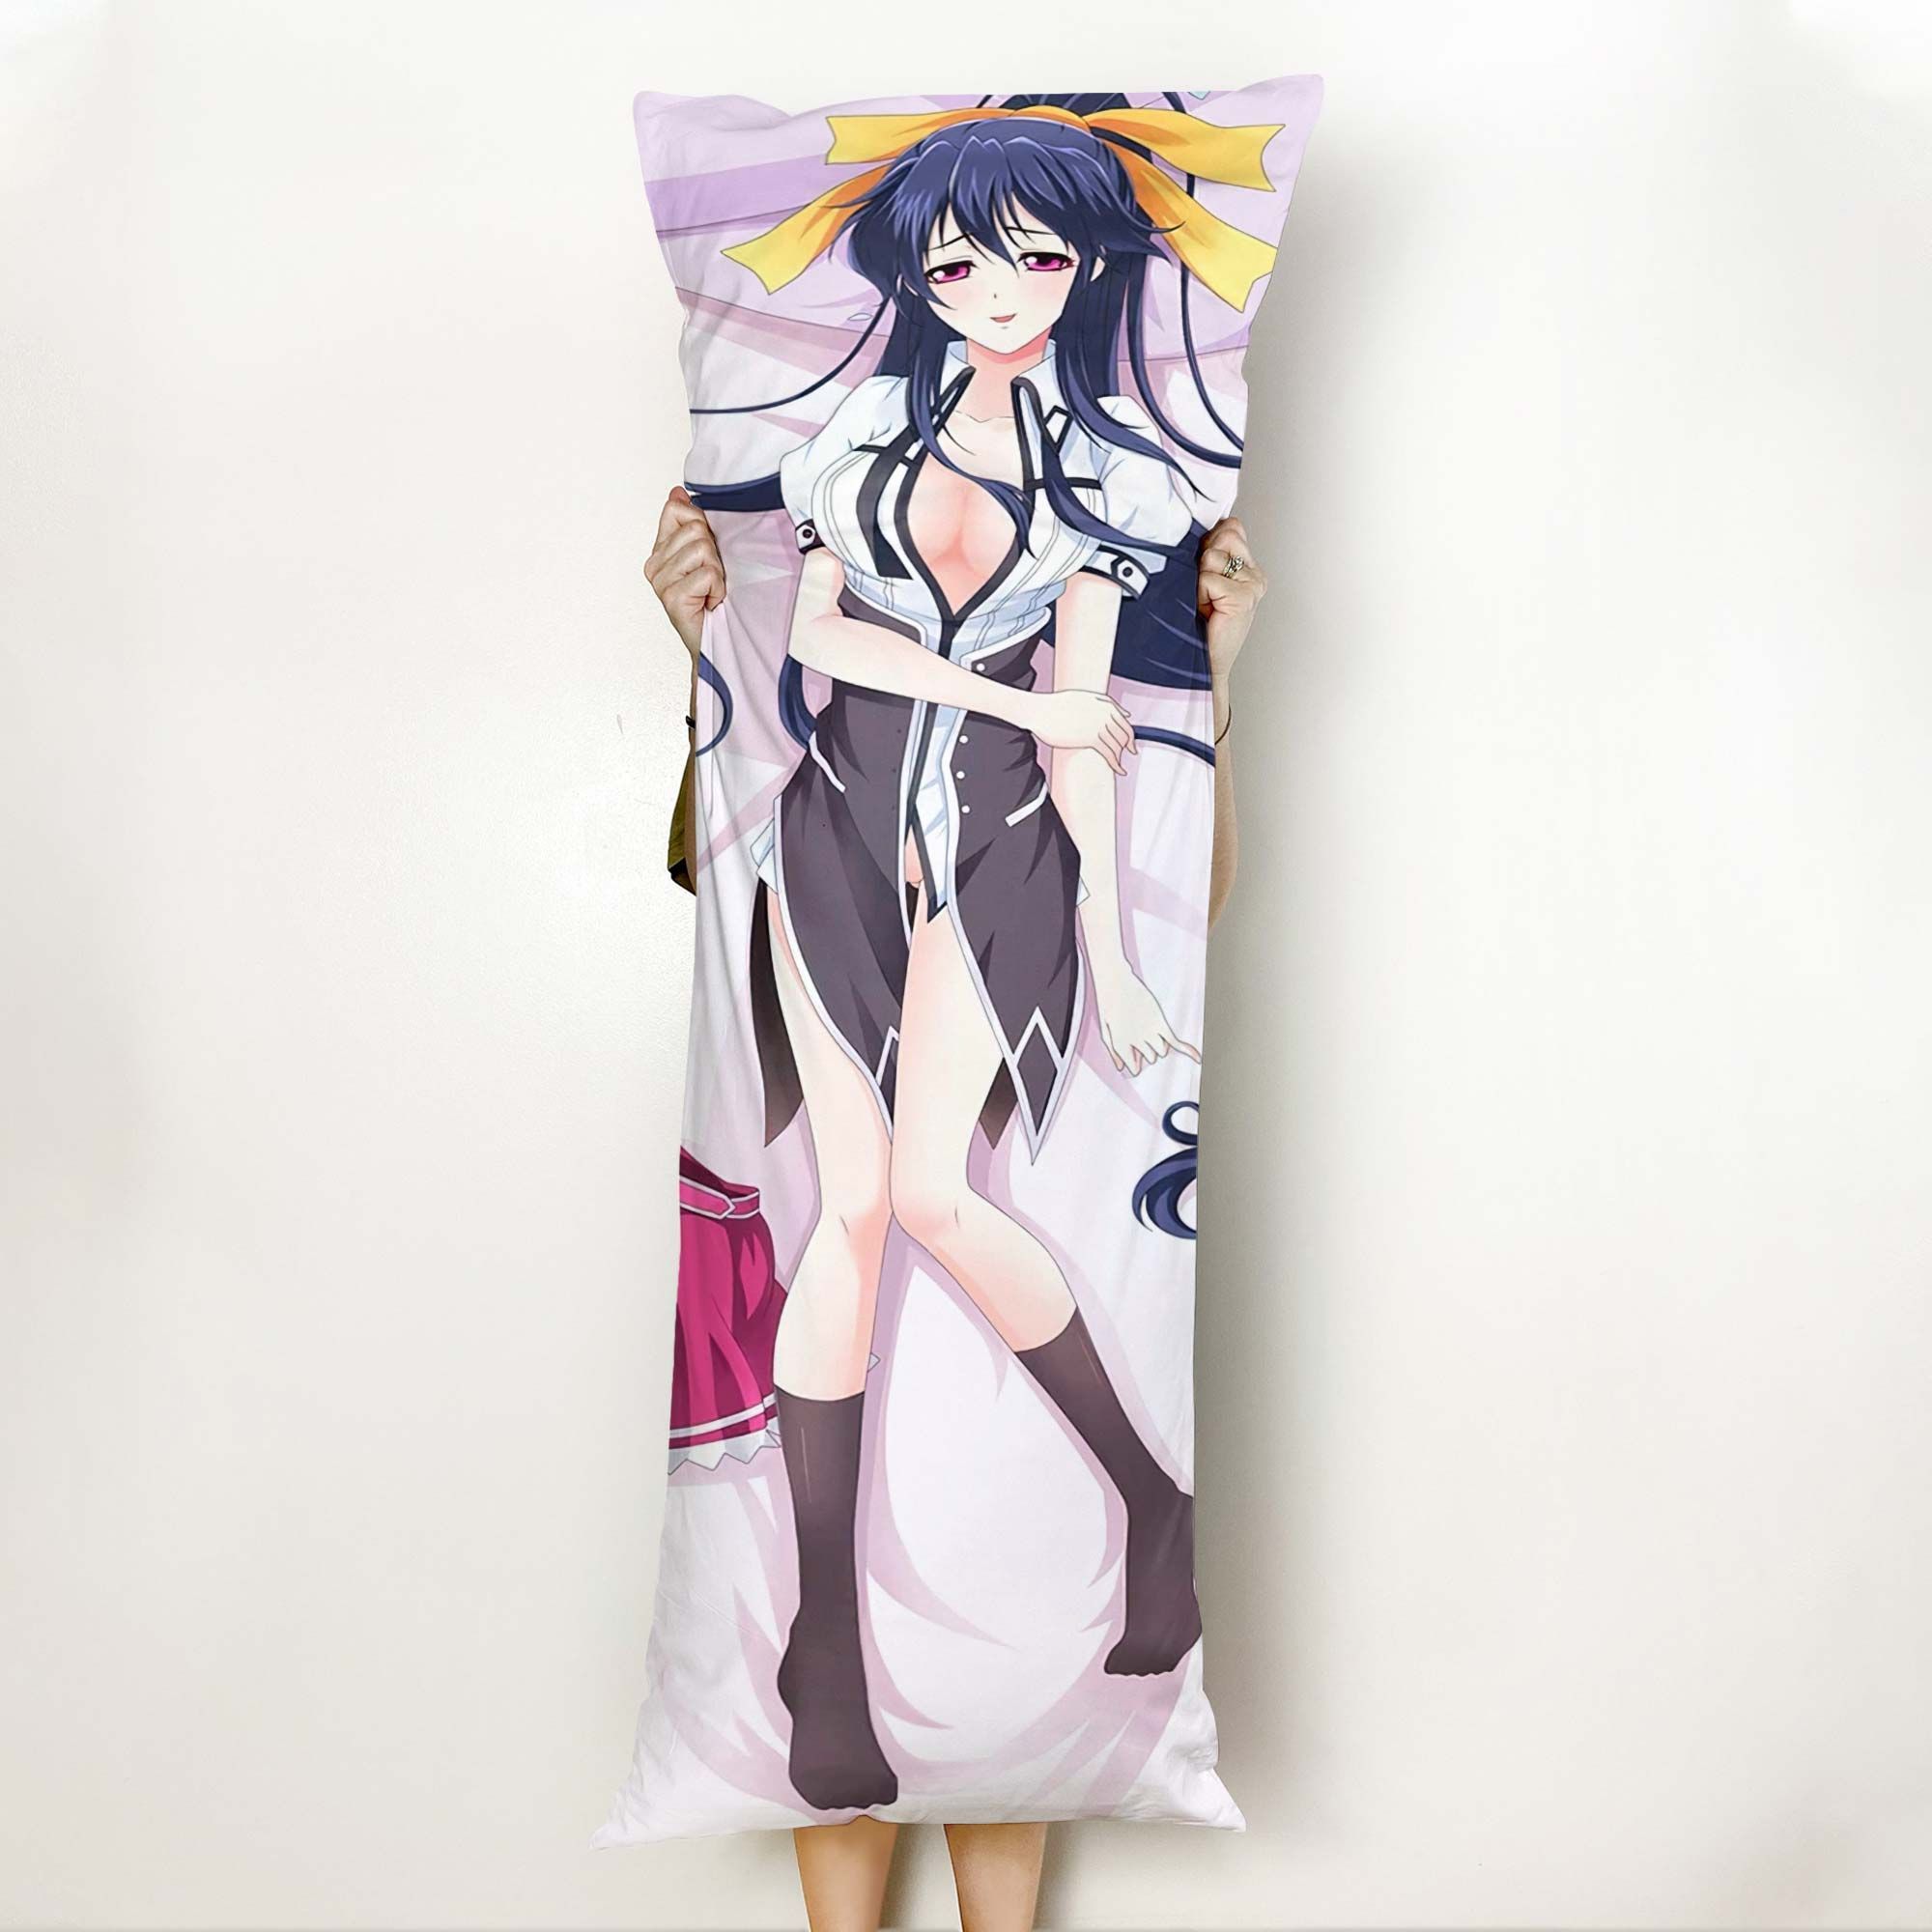 Akeno Himejima Body Pillow Cover Anime Gifts Idea For Otaku Girl Official Merch GO0110